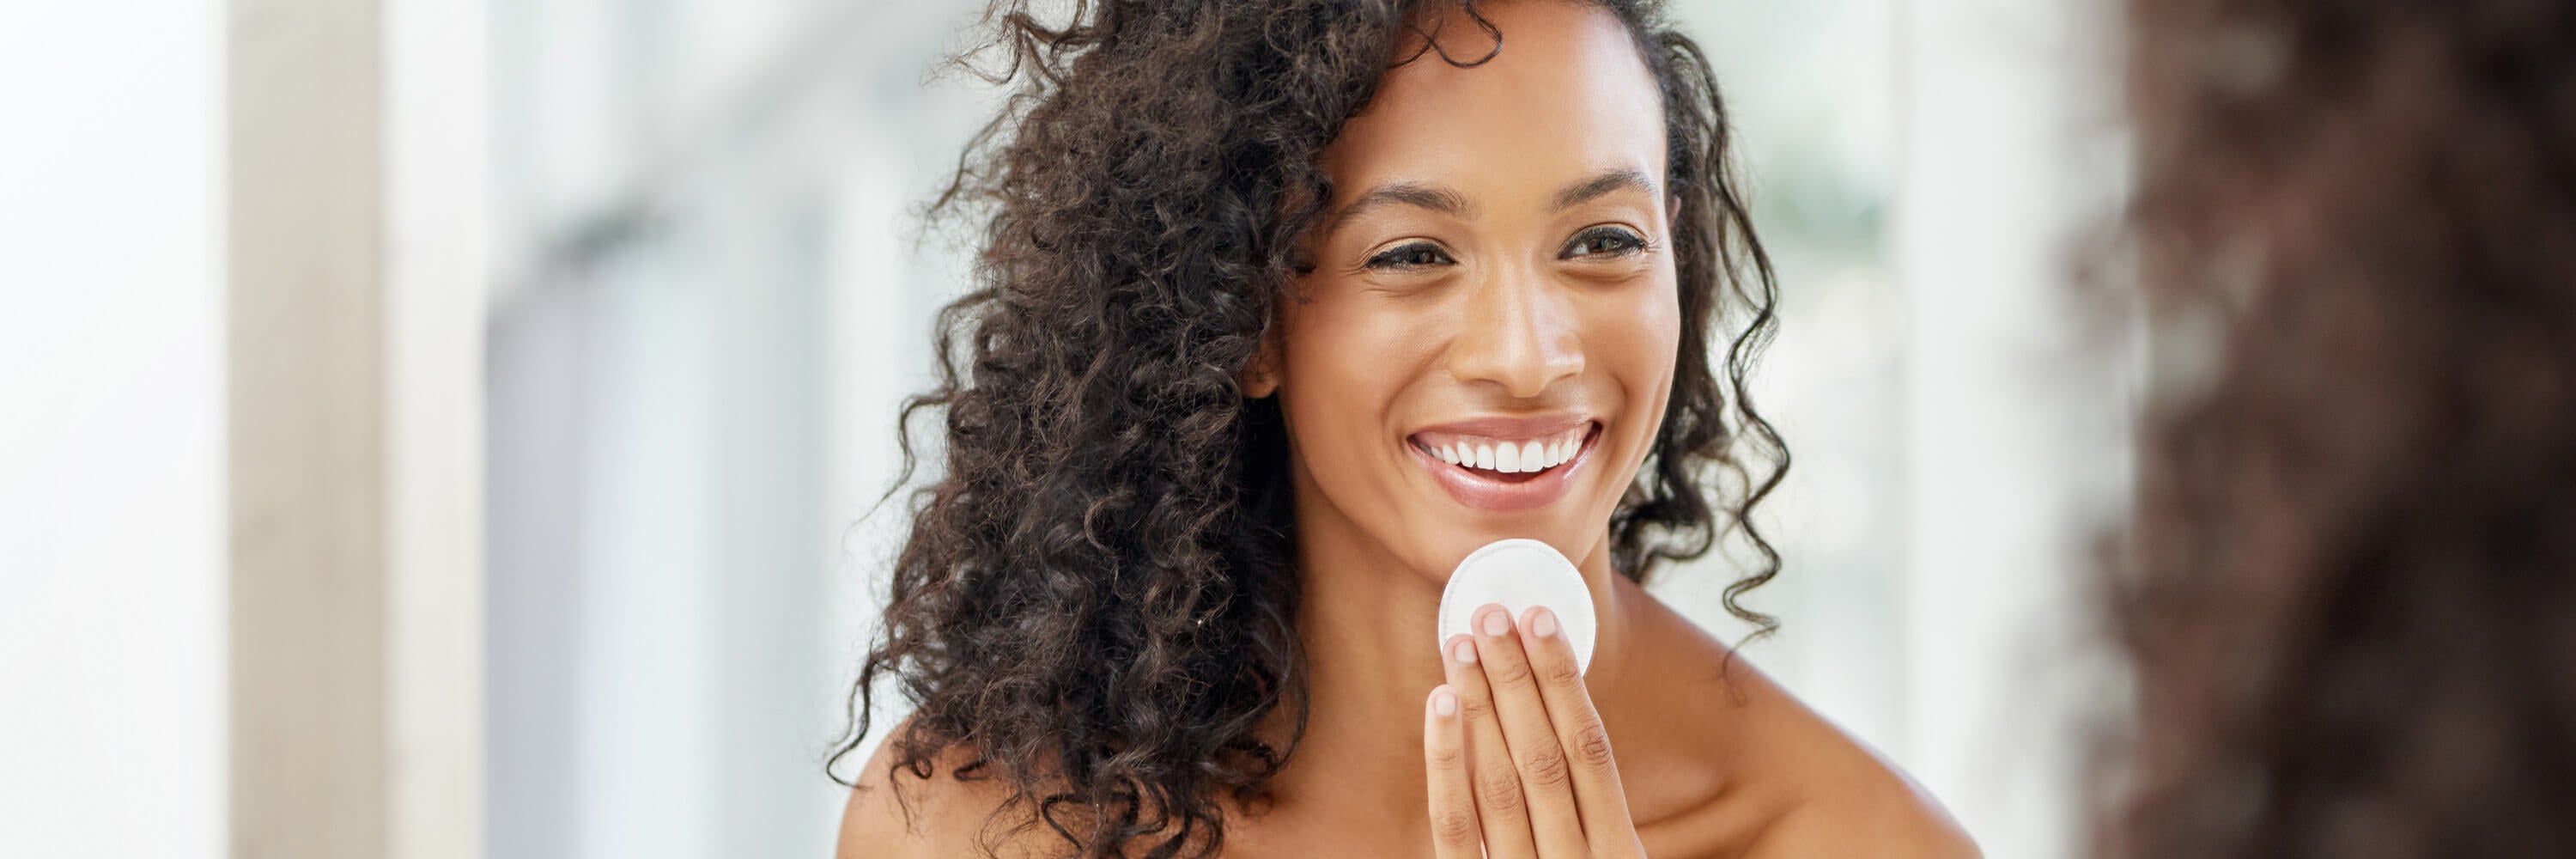 Black woman applying toner to her her face | Kadalys natural vegan exfoliators and toners for face